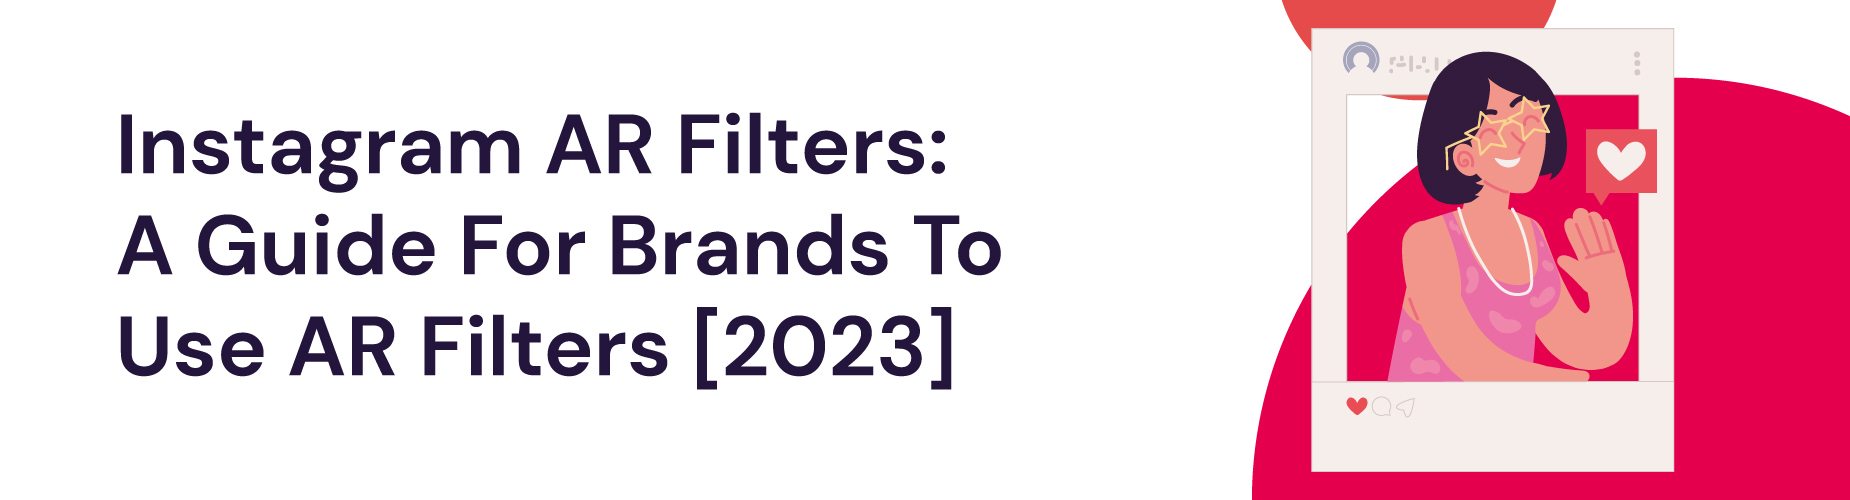 instagram ar filters guide for brands